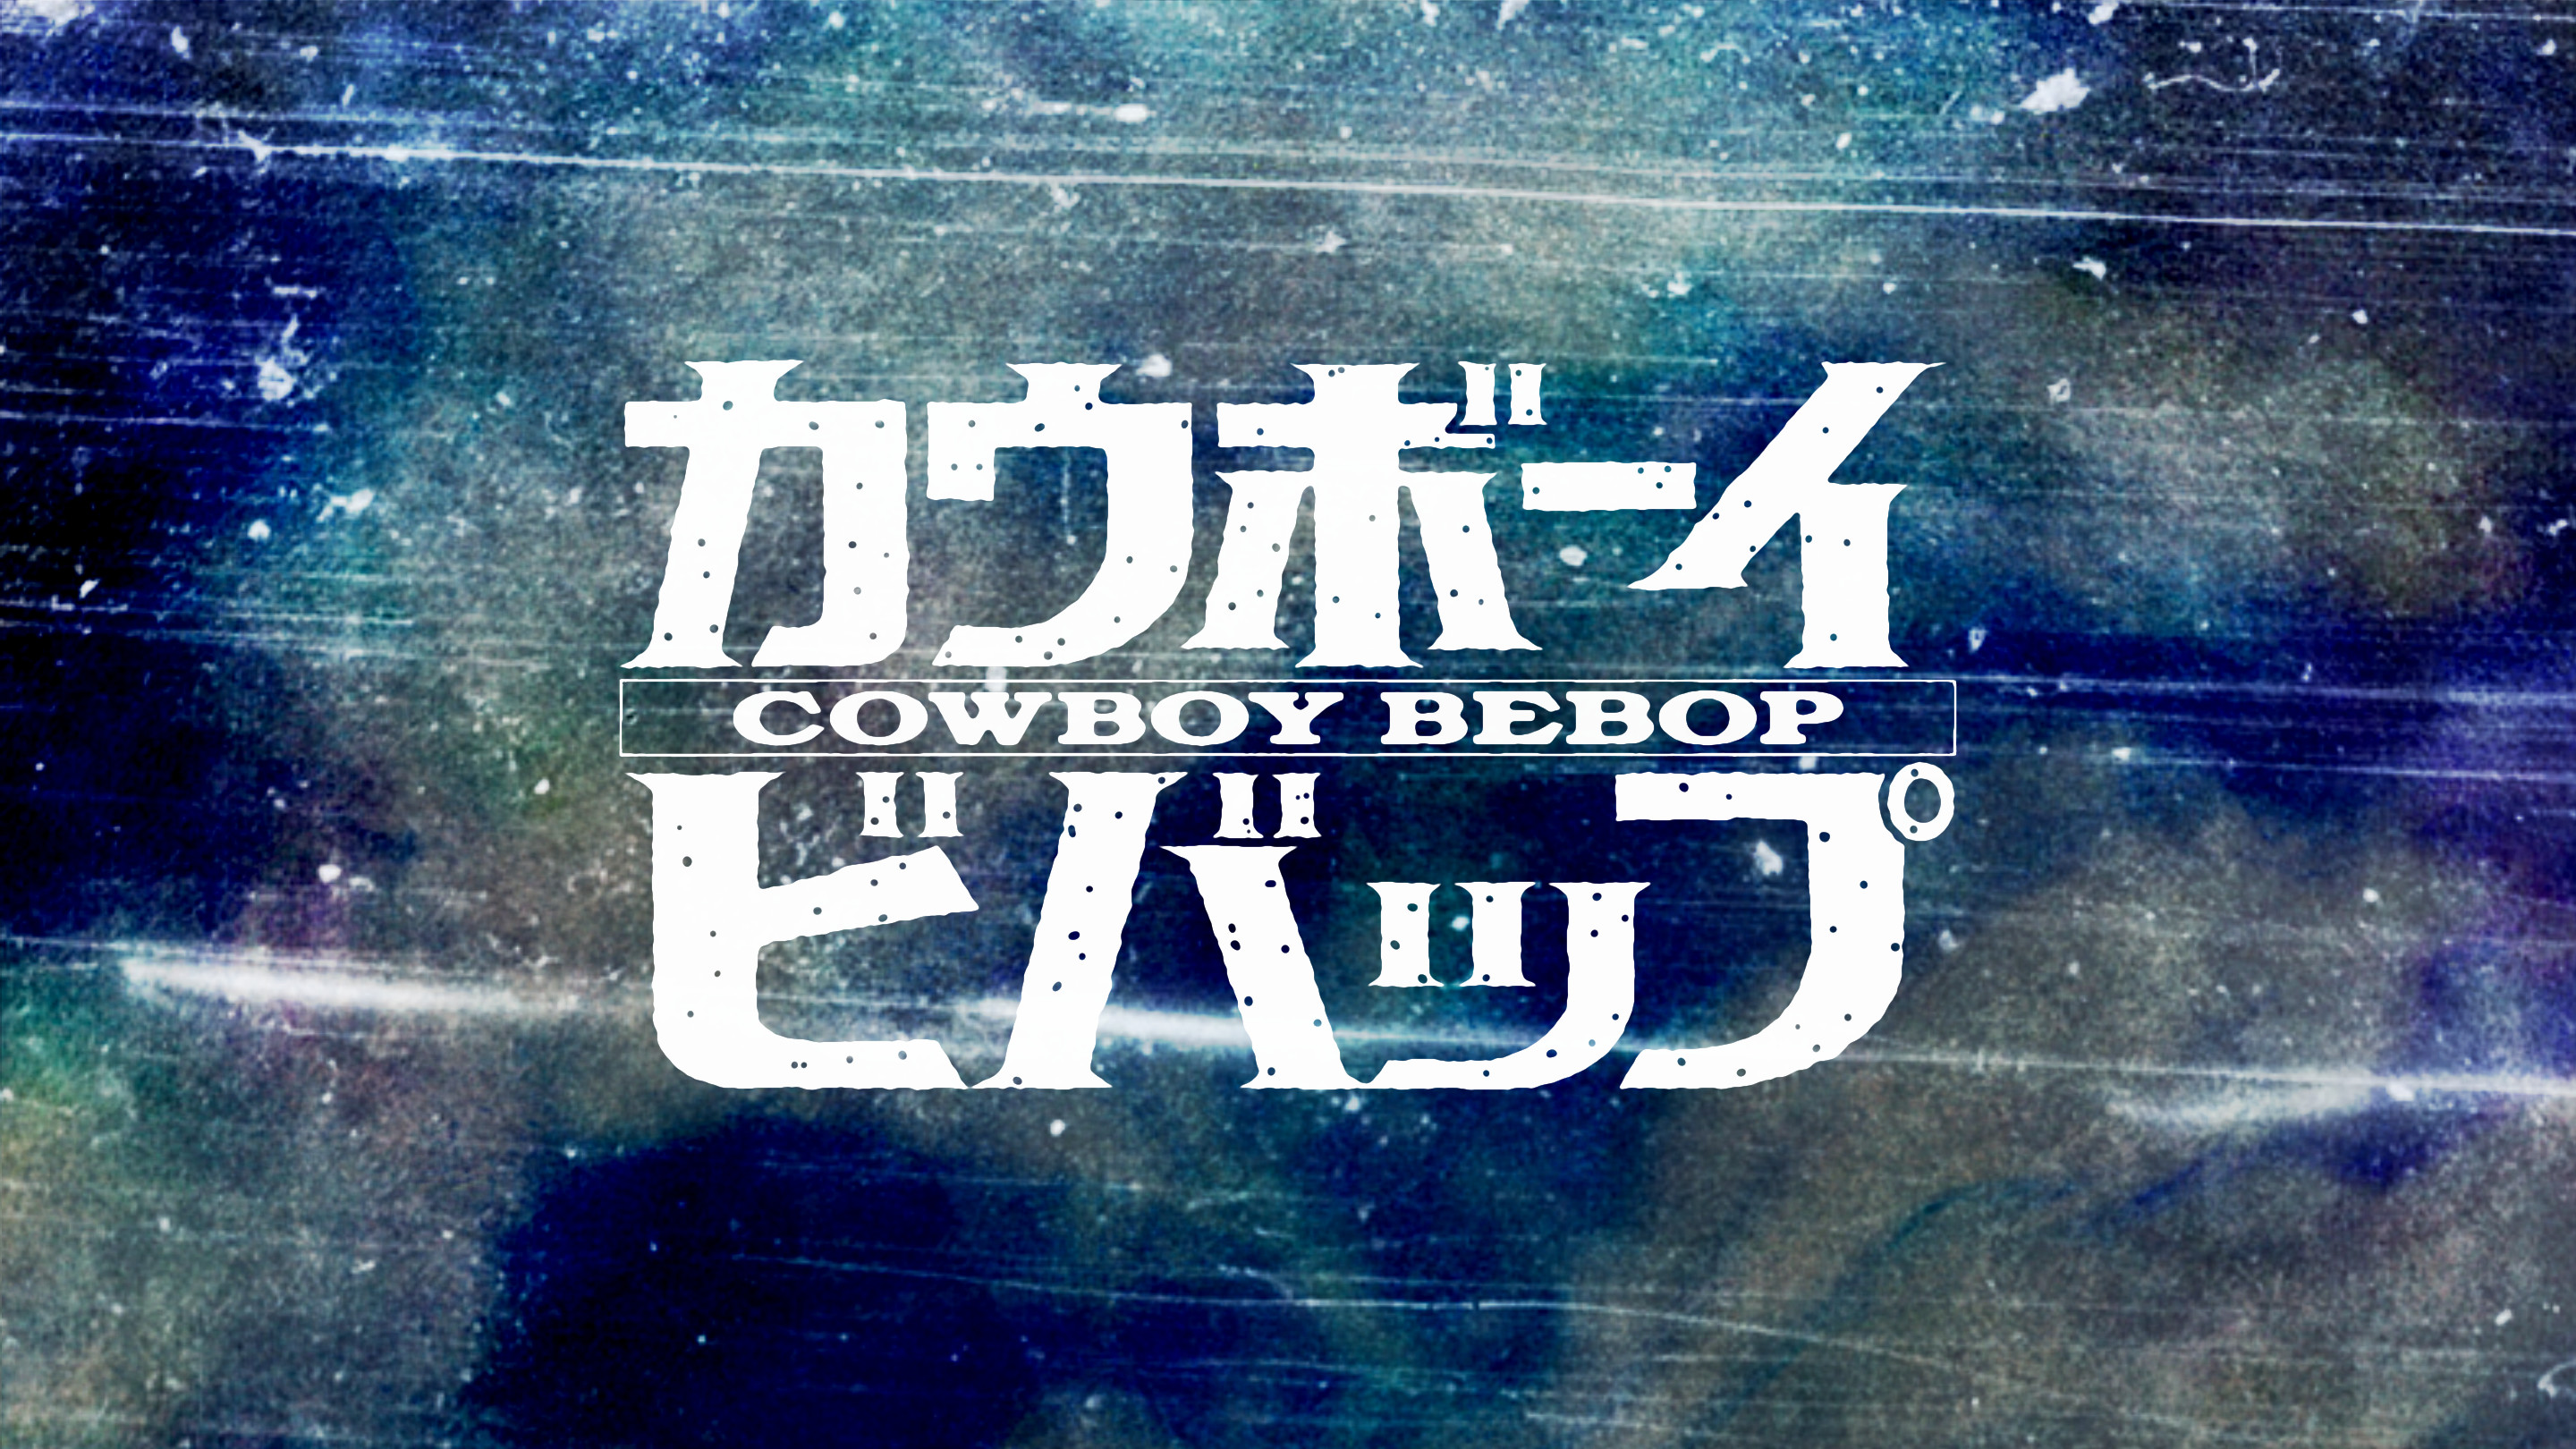 2880x1620 ... Jam' - Cowboy Bebop Wallpaper by CosmicWaffleBison